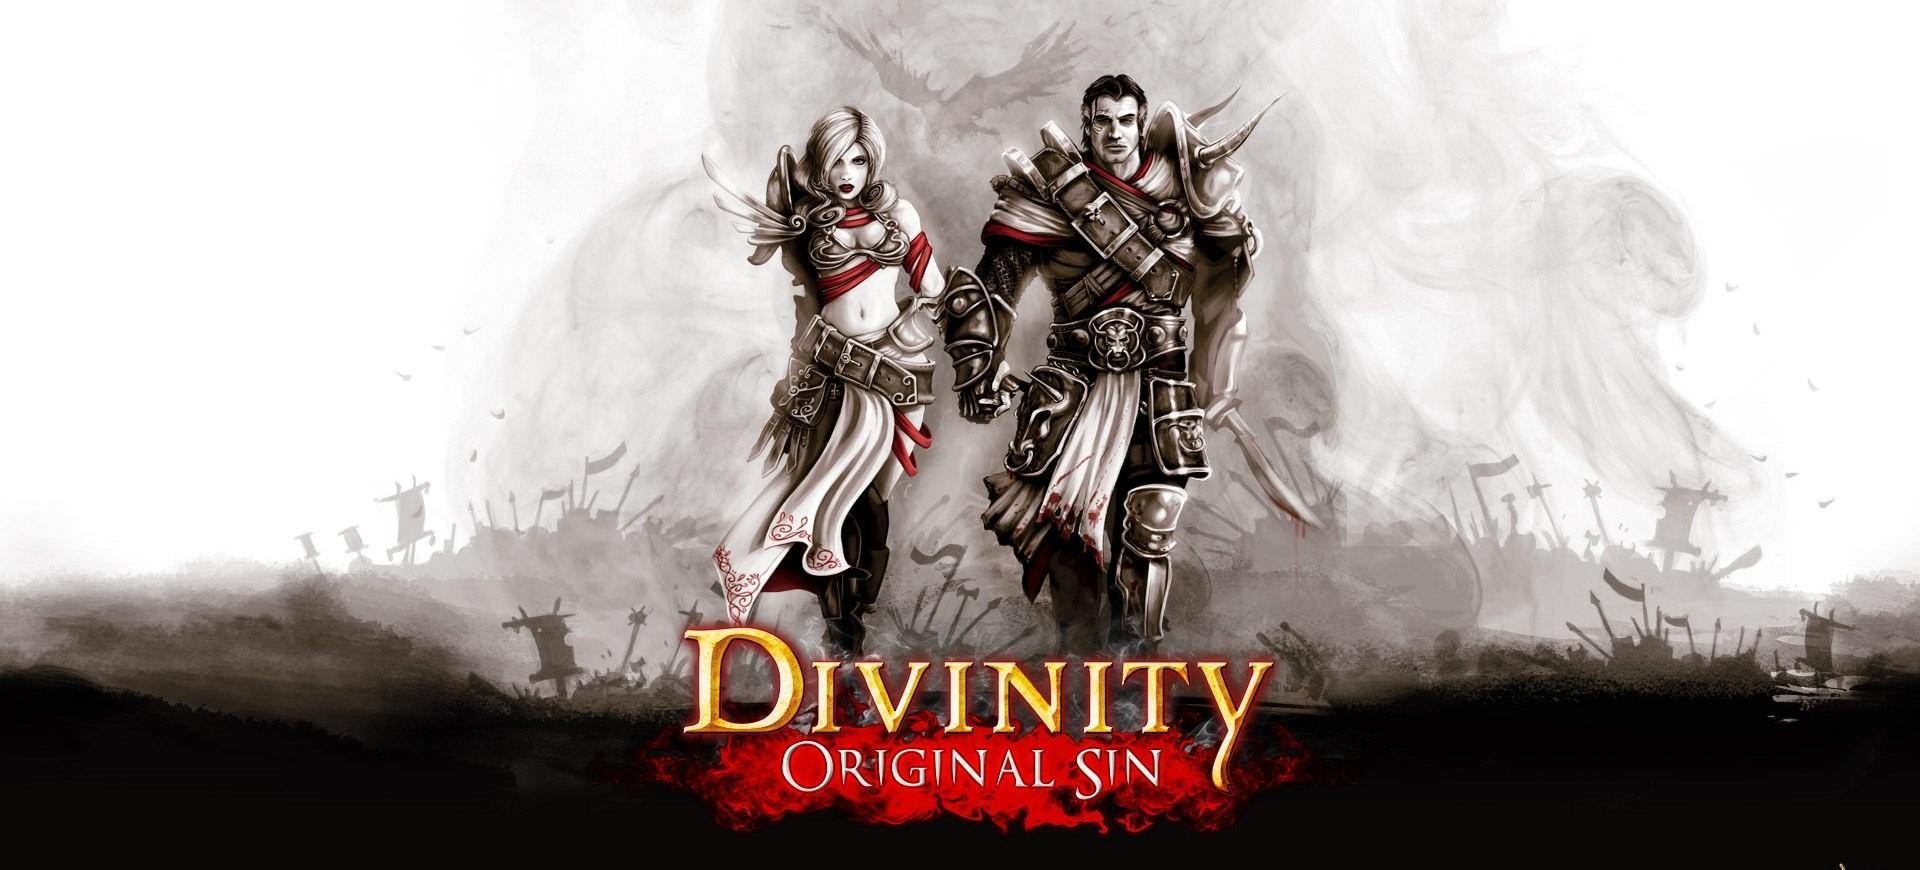 Divinity: Original Sin - Đánh Giá Game